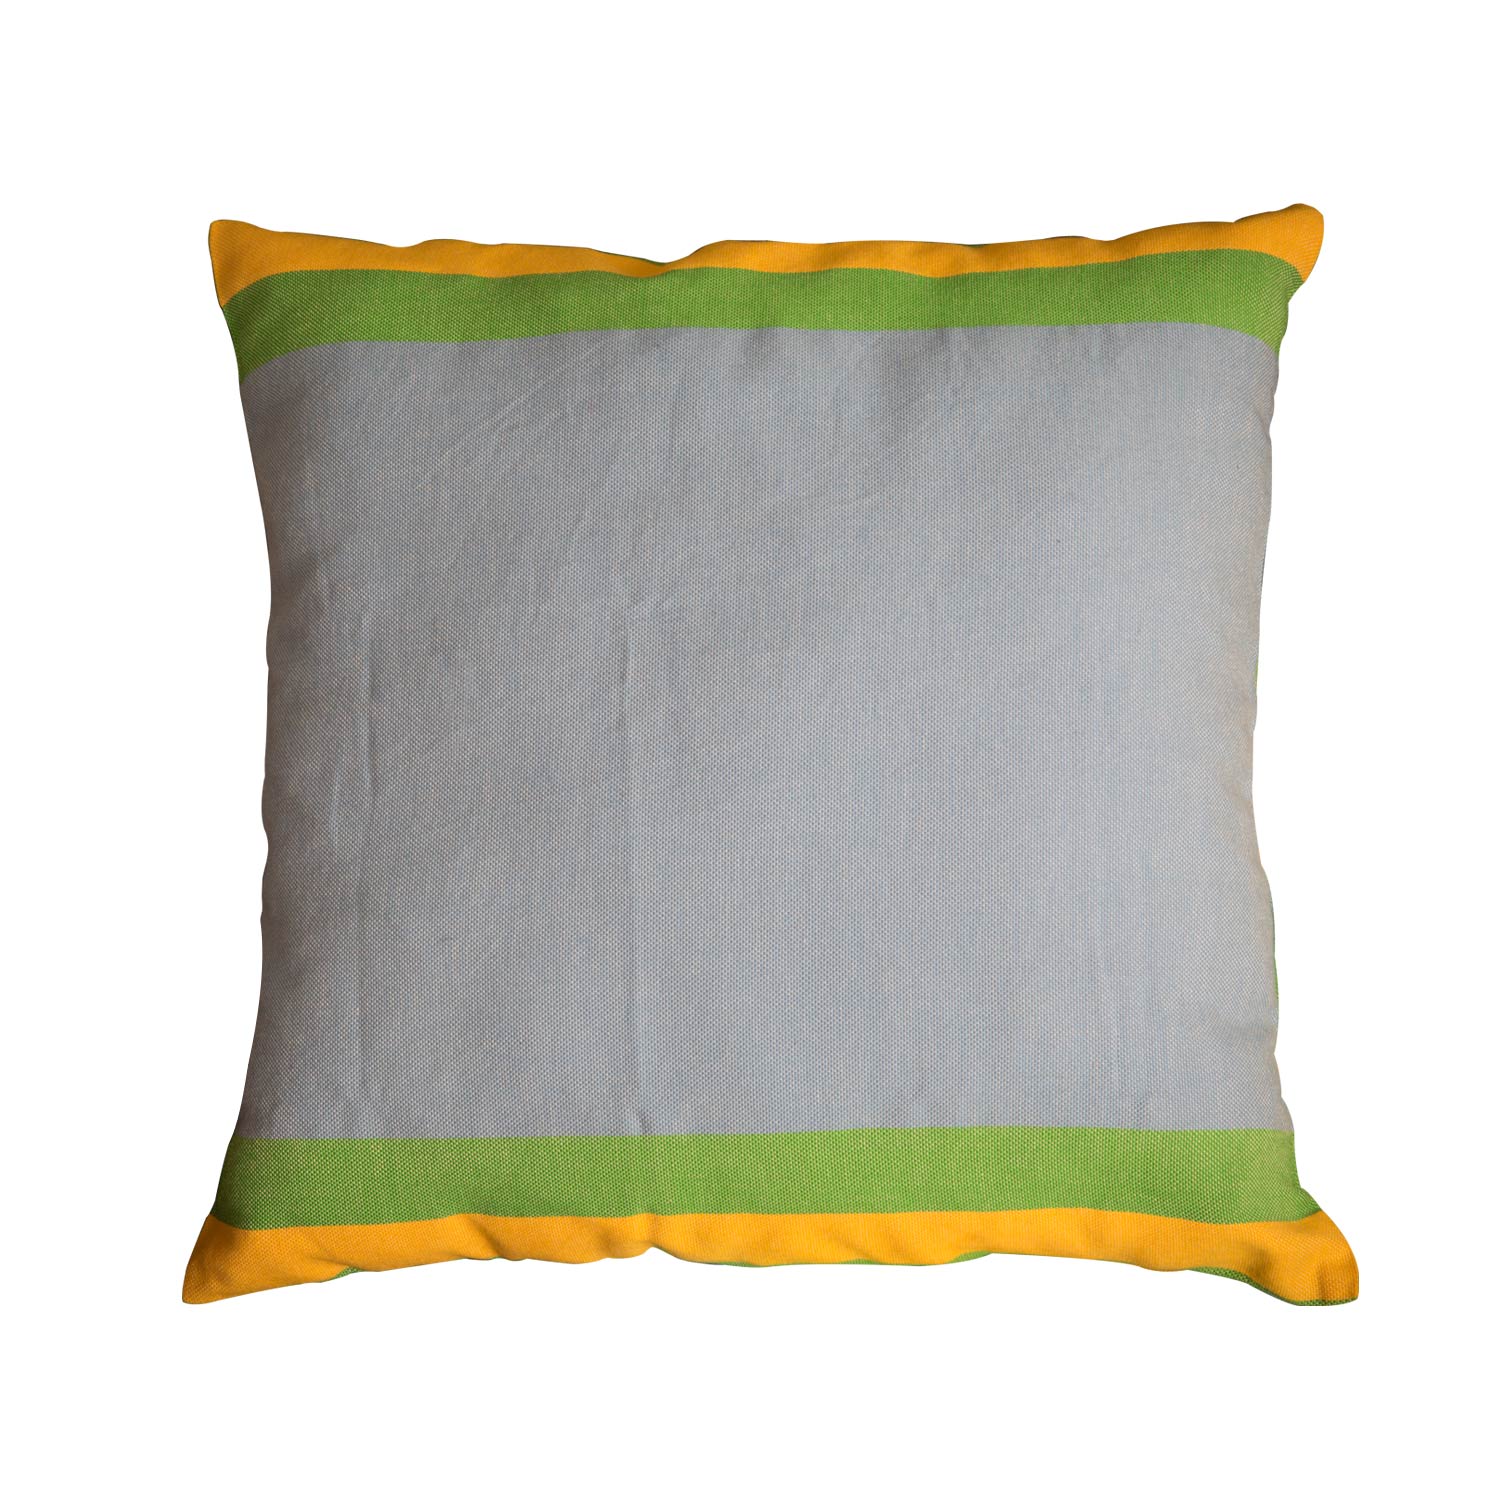 Housse coussin coton tricolore vert jaune turquoise 40 x 40